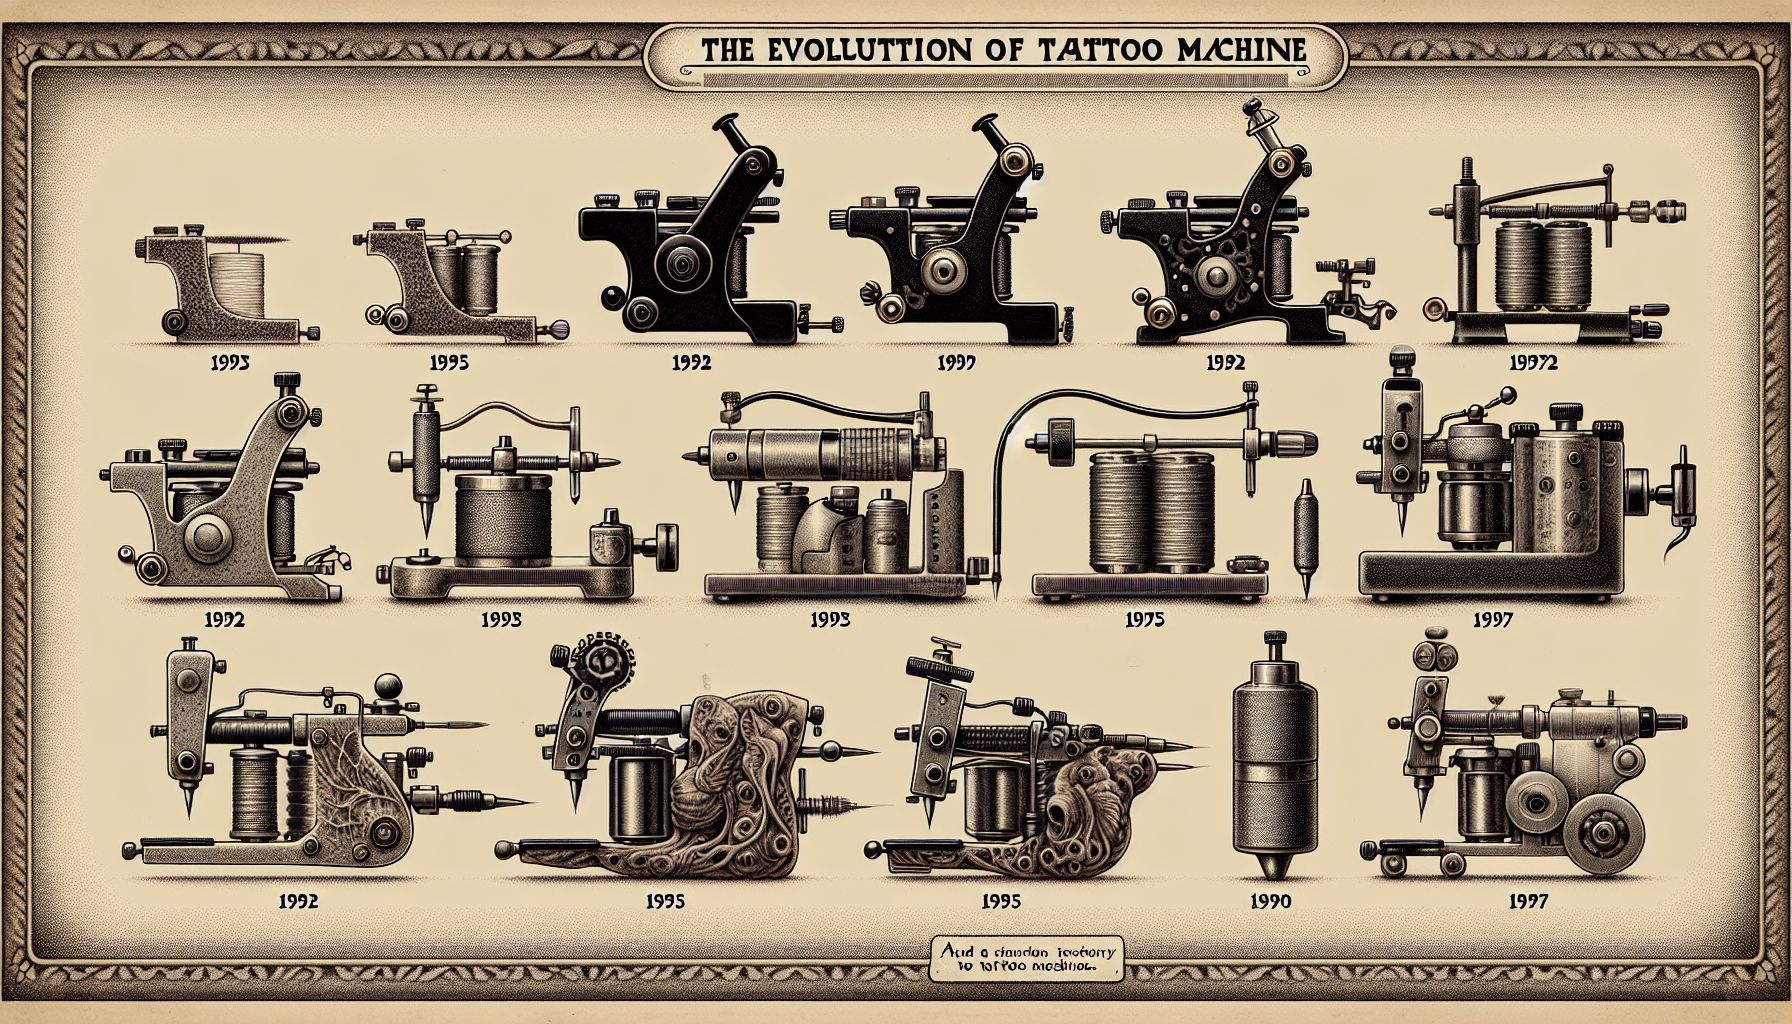 The Evolution of Tattoo Machines